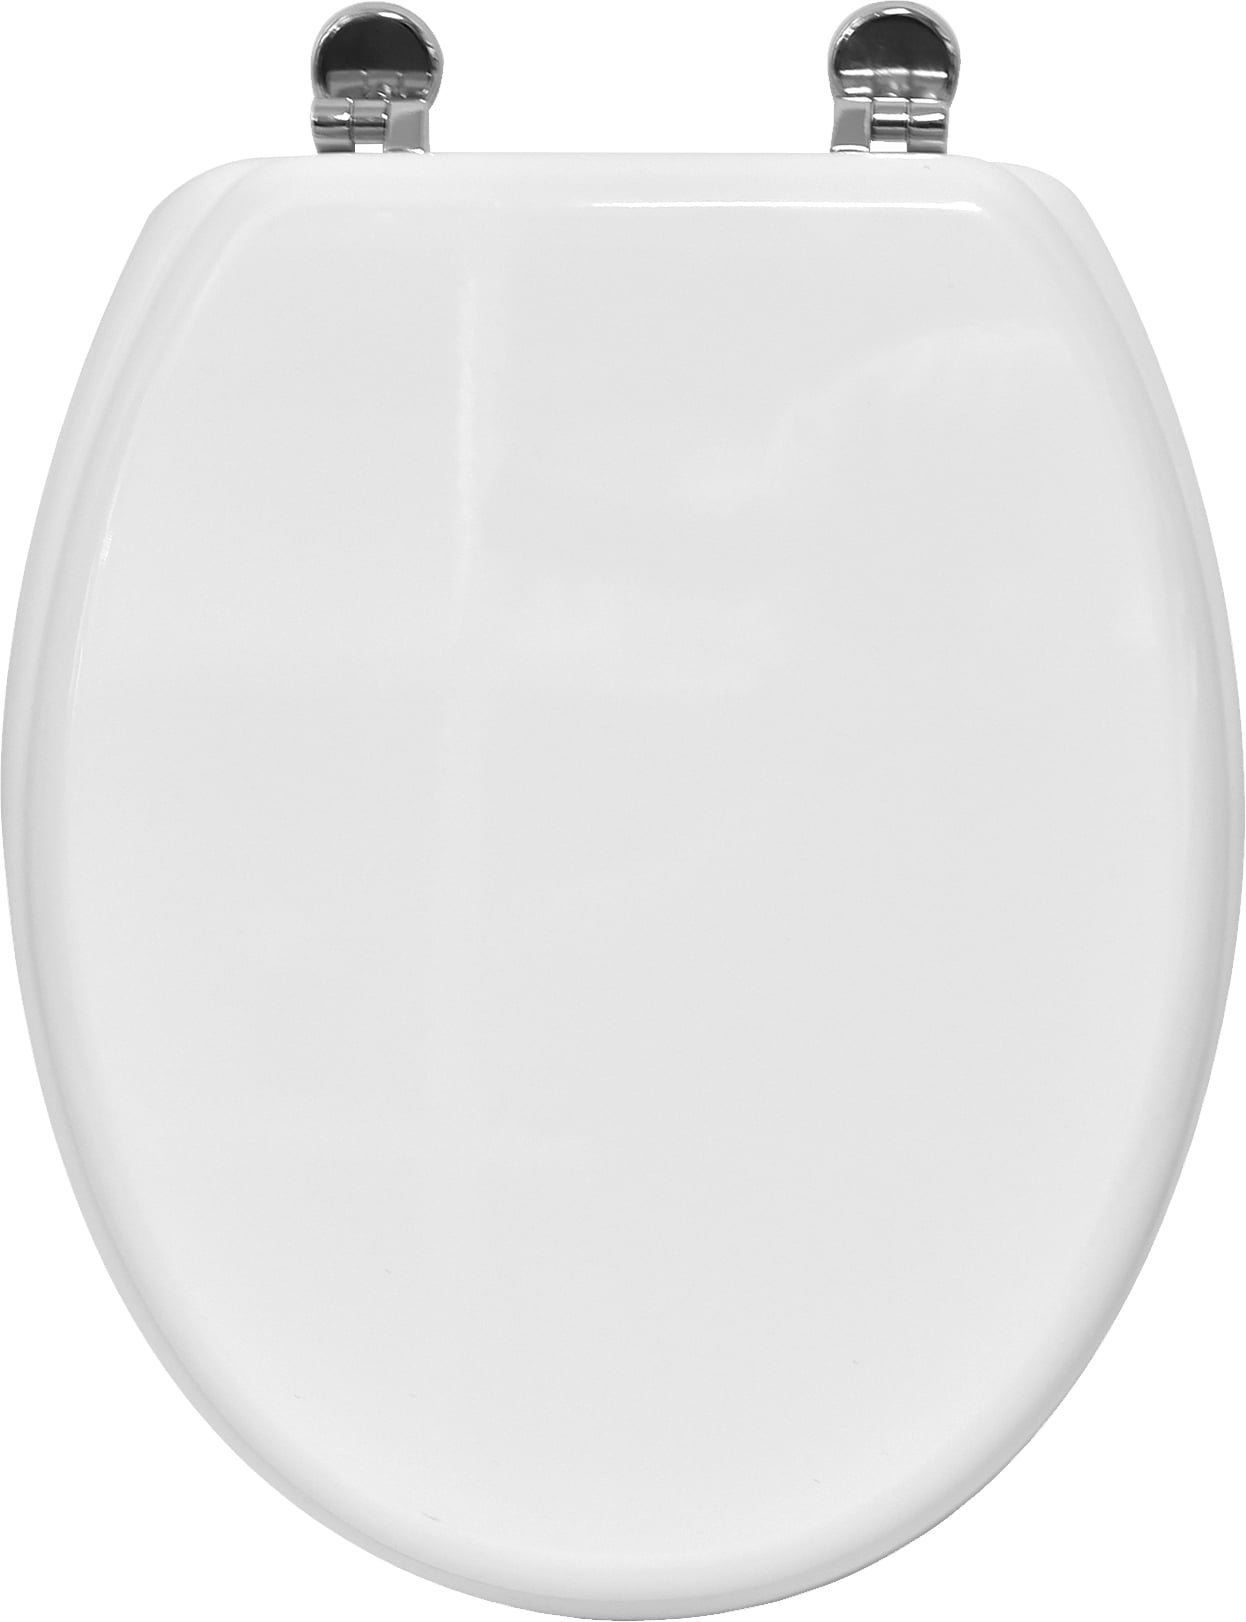 Toilet Seat Printed Round Soft  Foam Design 15.5" L X 14.25" W Evideco 